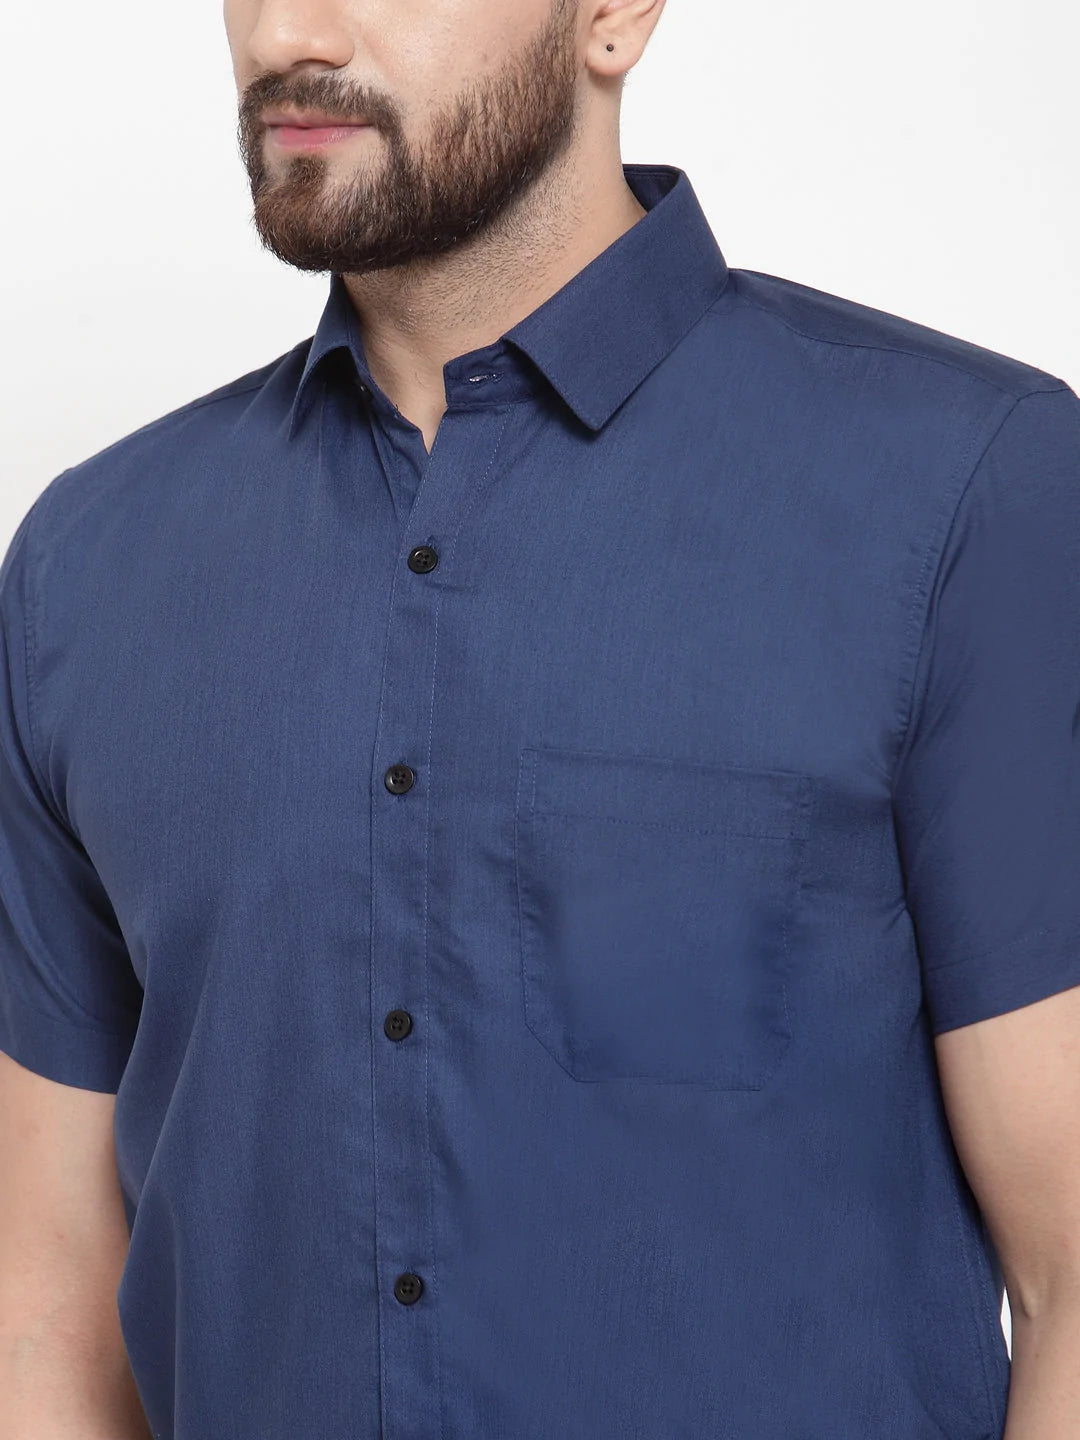 Jainish Blue Men's Cotton Half Sleeves Solid Formal Shirts ( SF 754Peacock )